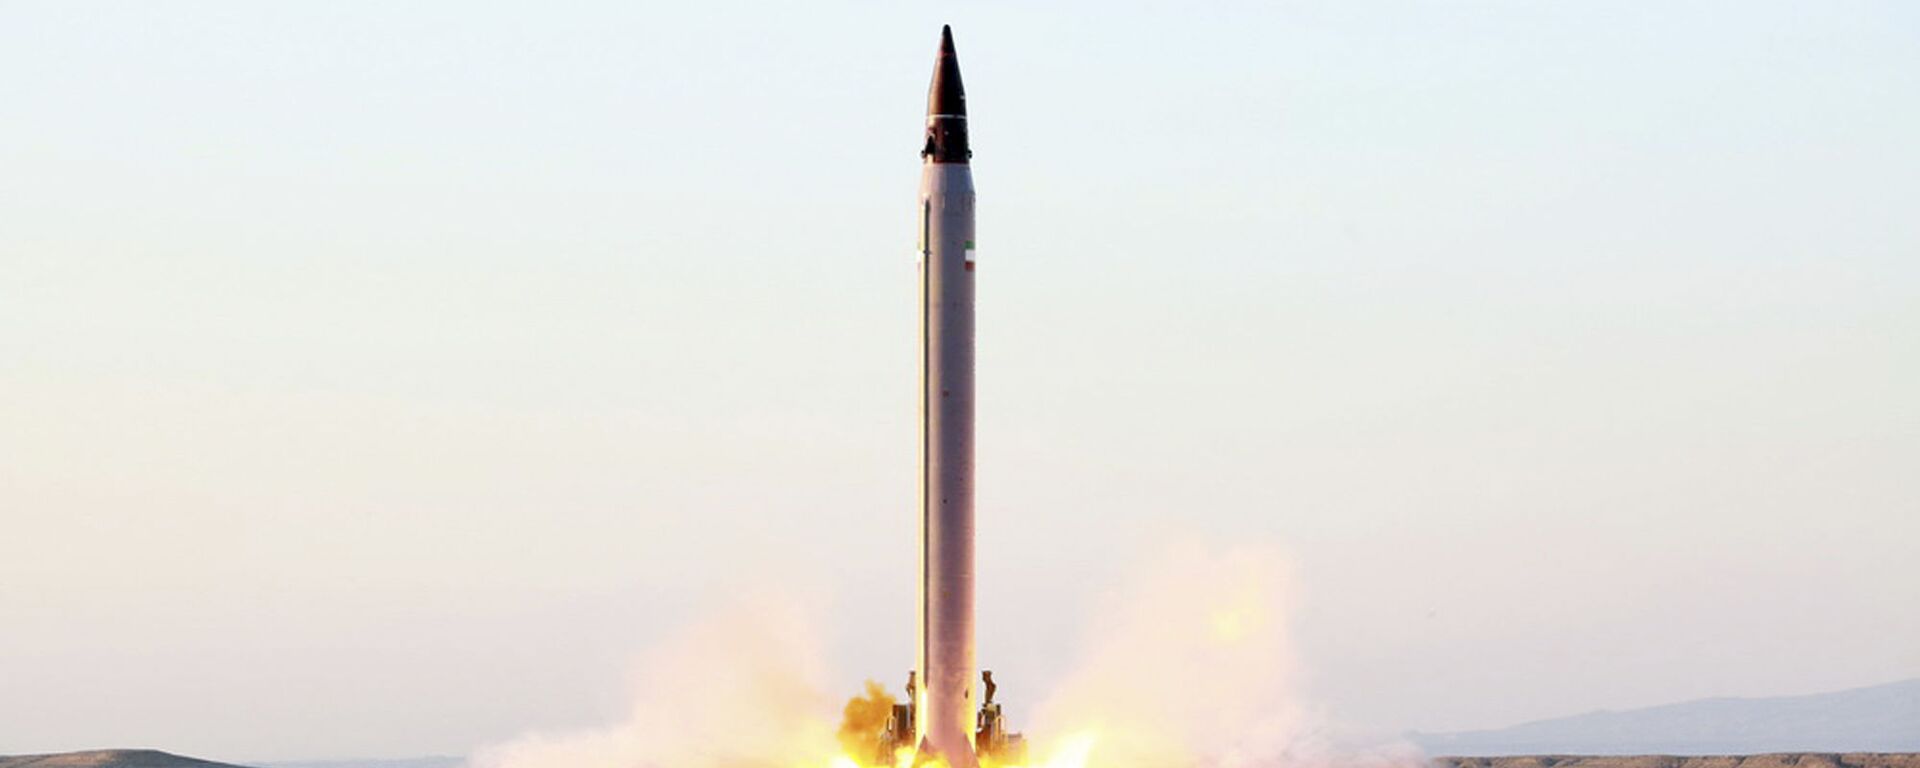 إطلاق صاروخ بالستي إيراني - سبوتنيك عربي, 1920, 15.03.2022